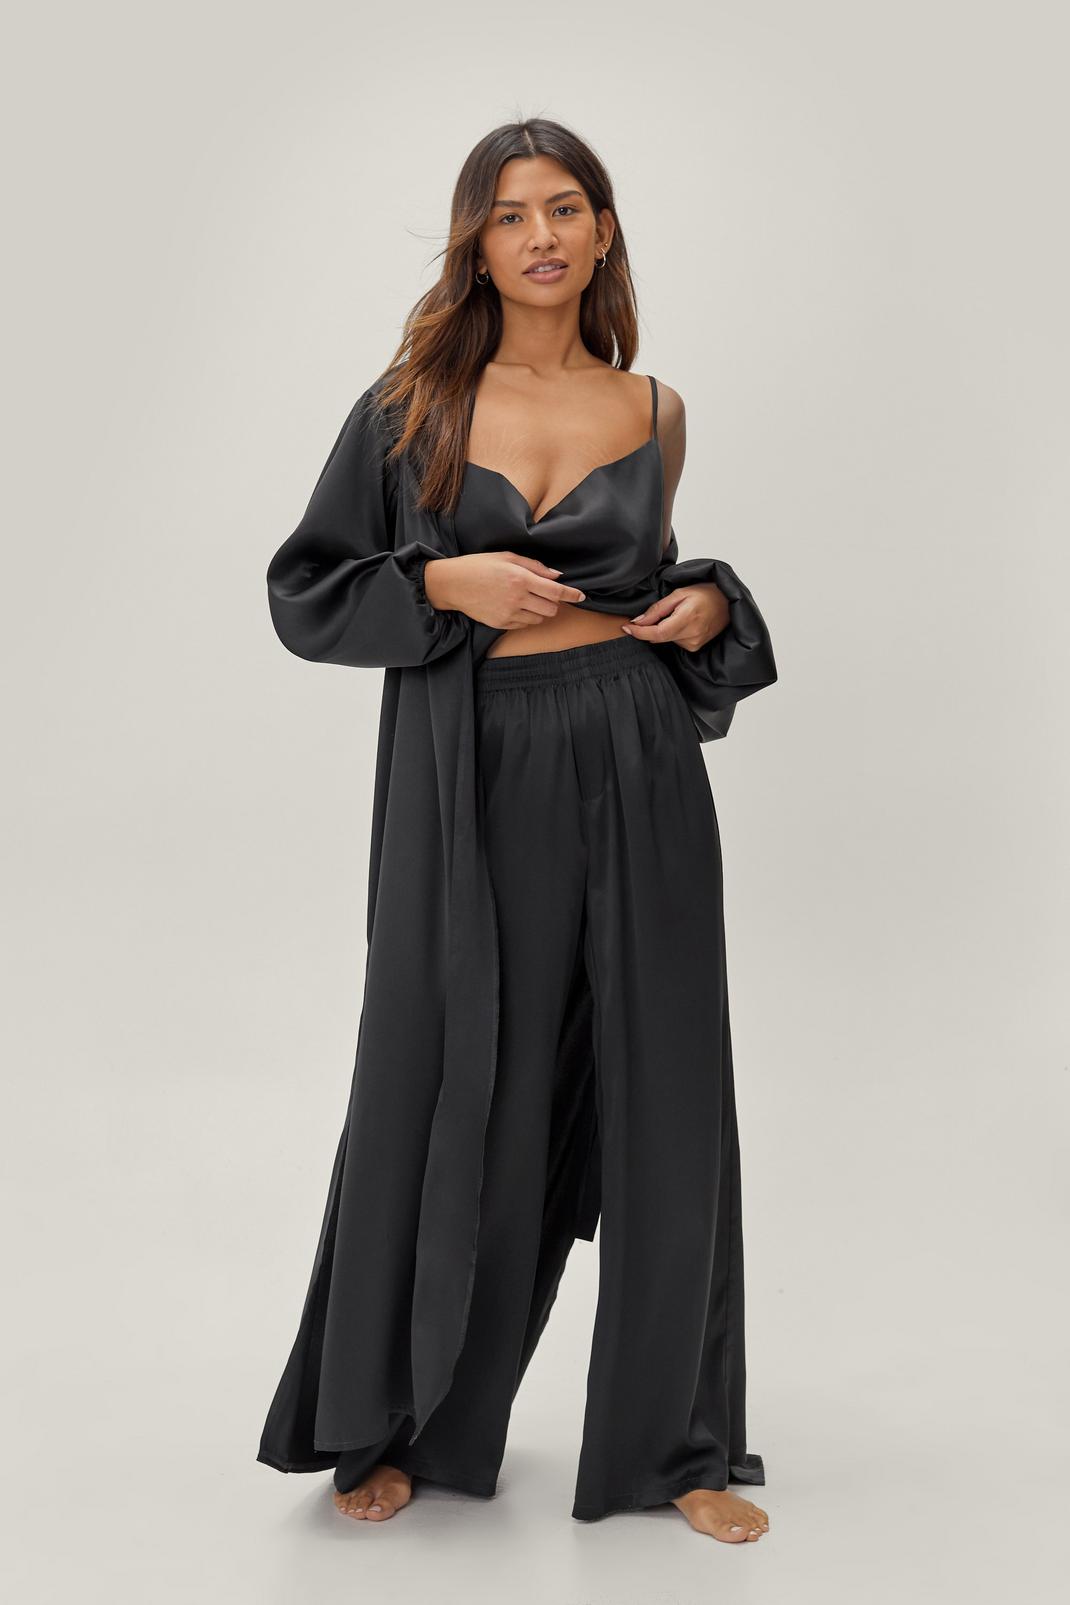 Black Satin Pajama Set Long Sleeve Robe With Belt V Neck Slip